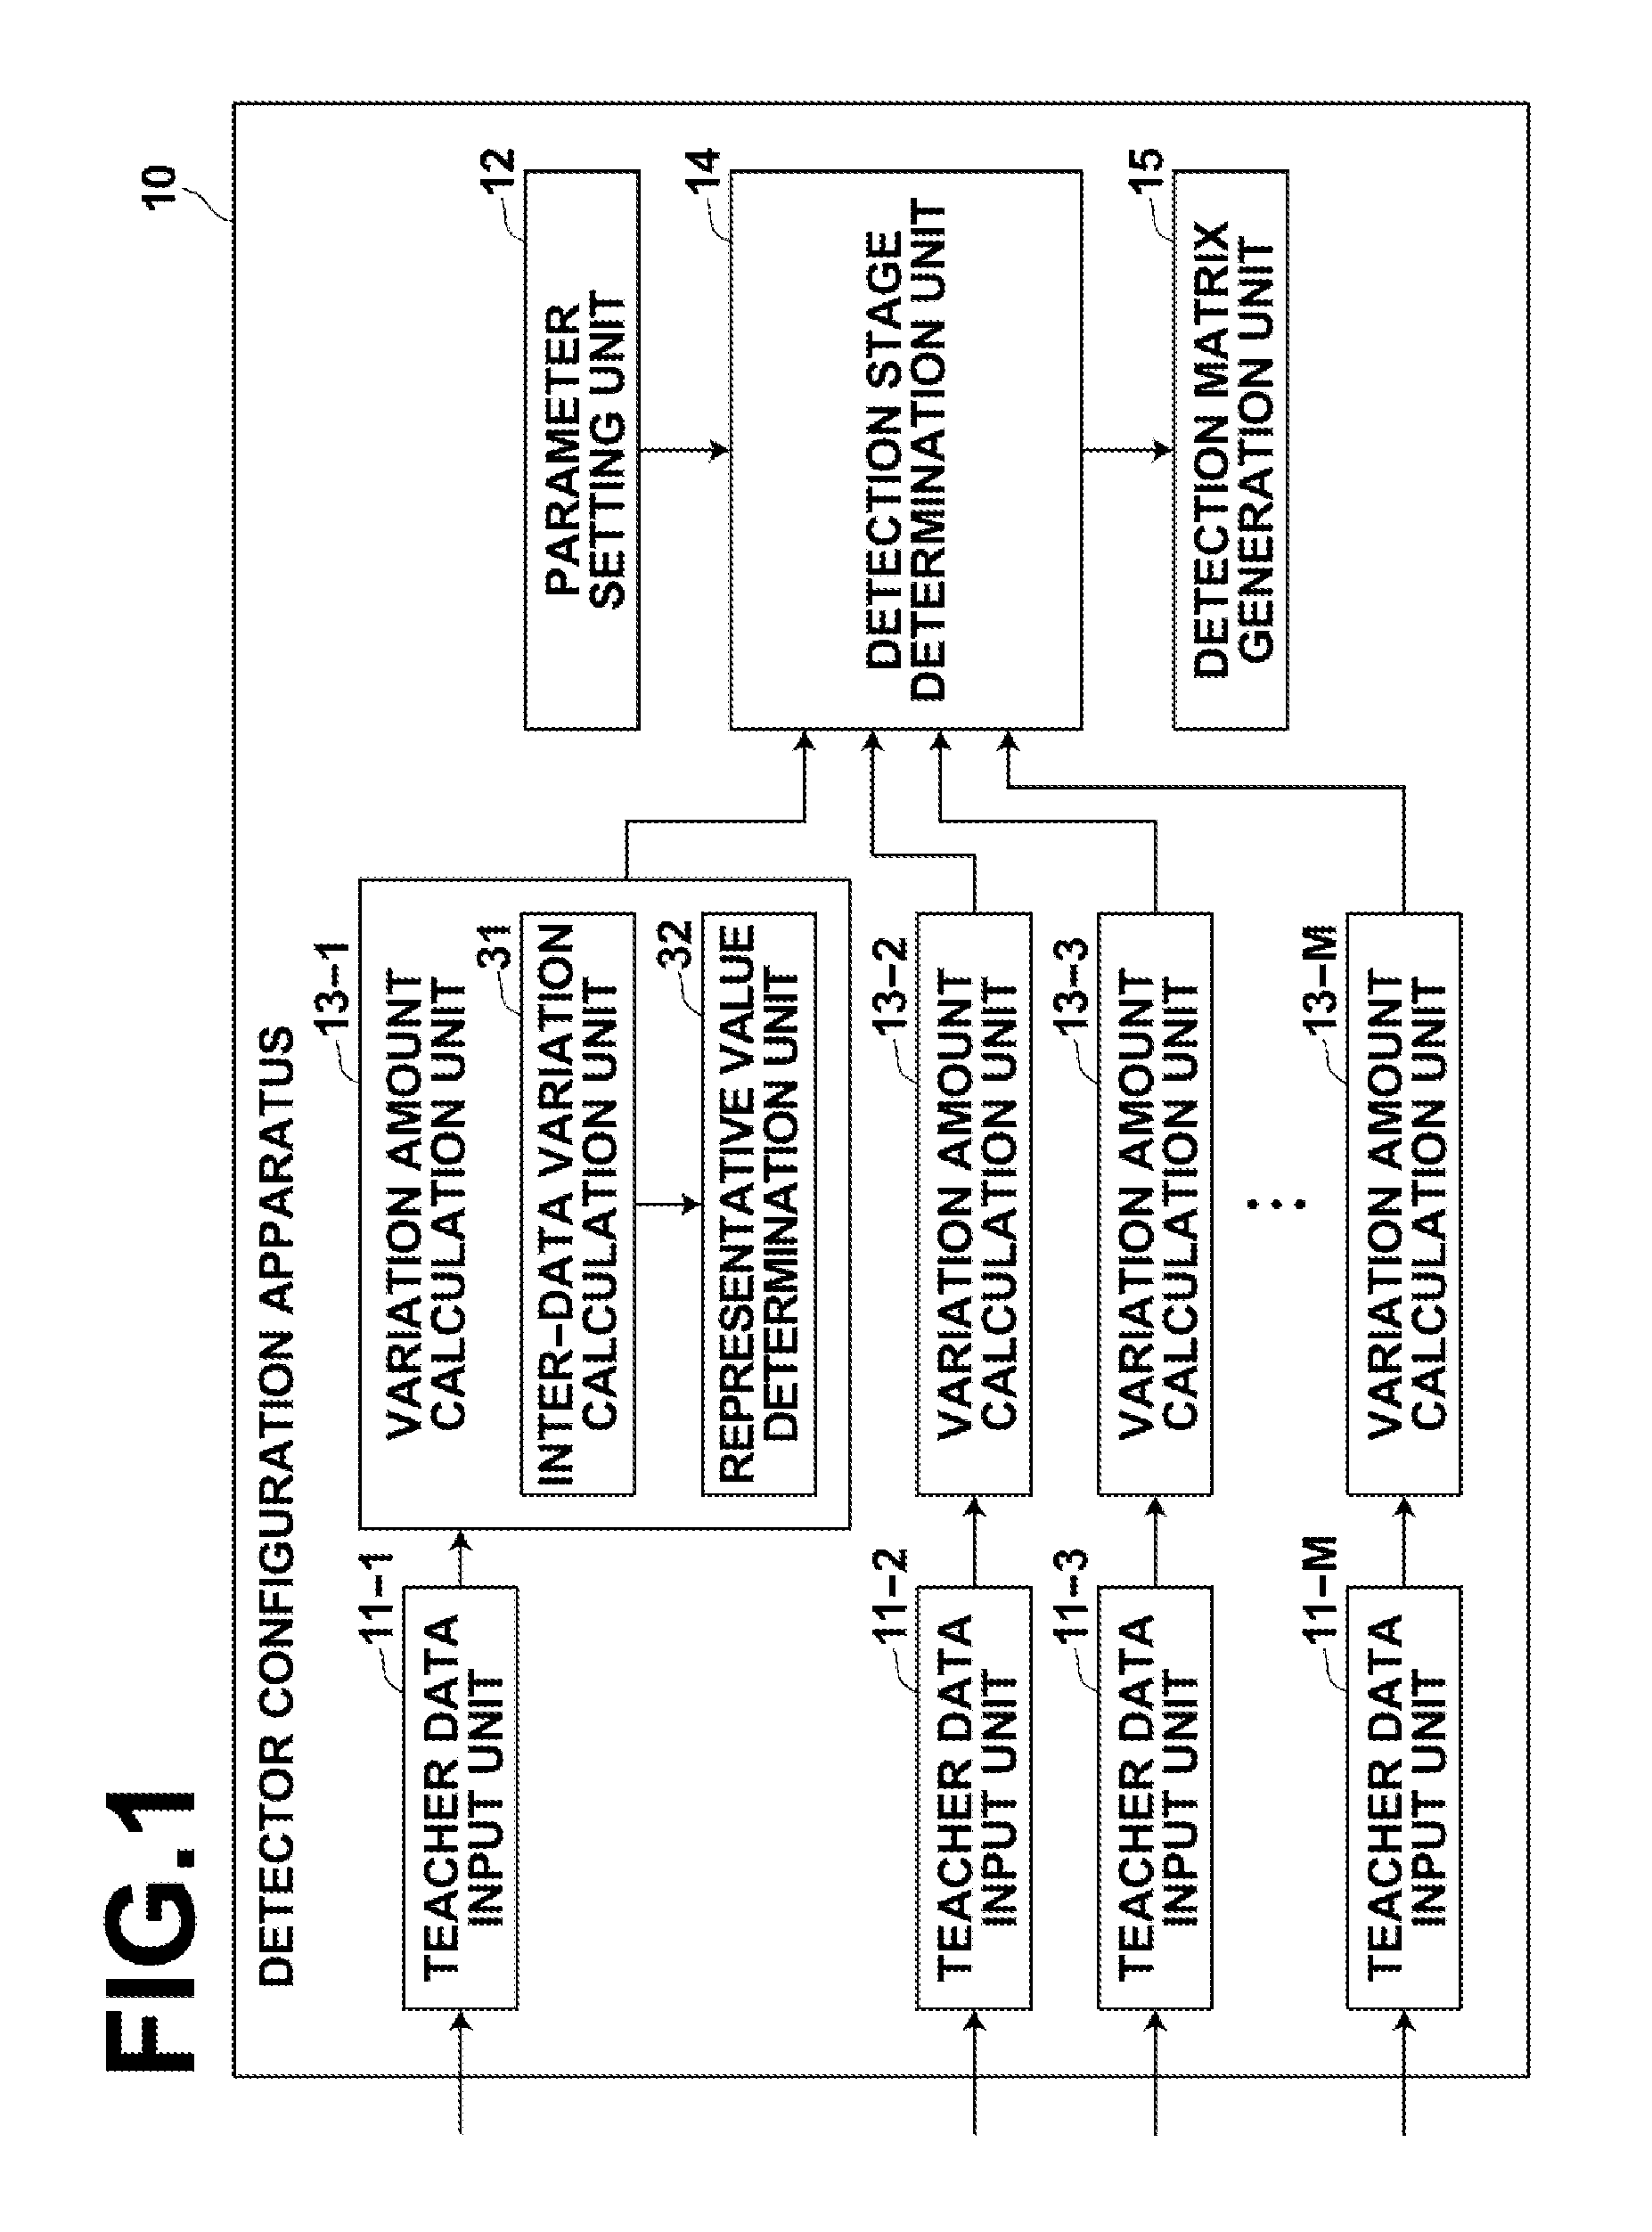 Detector configuration apparatus, method, and program